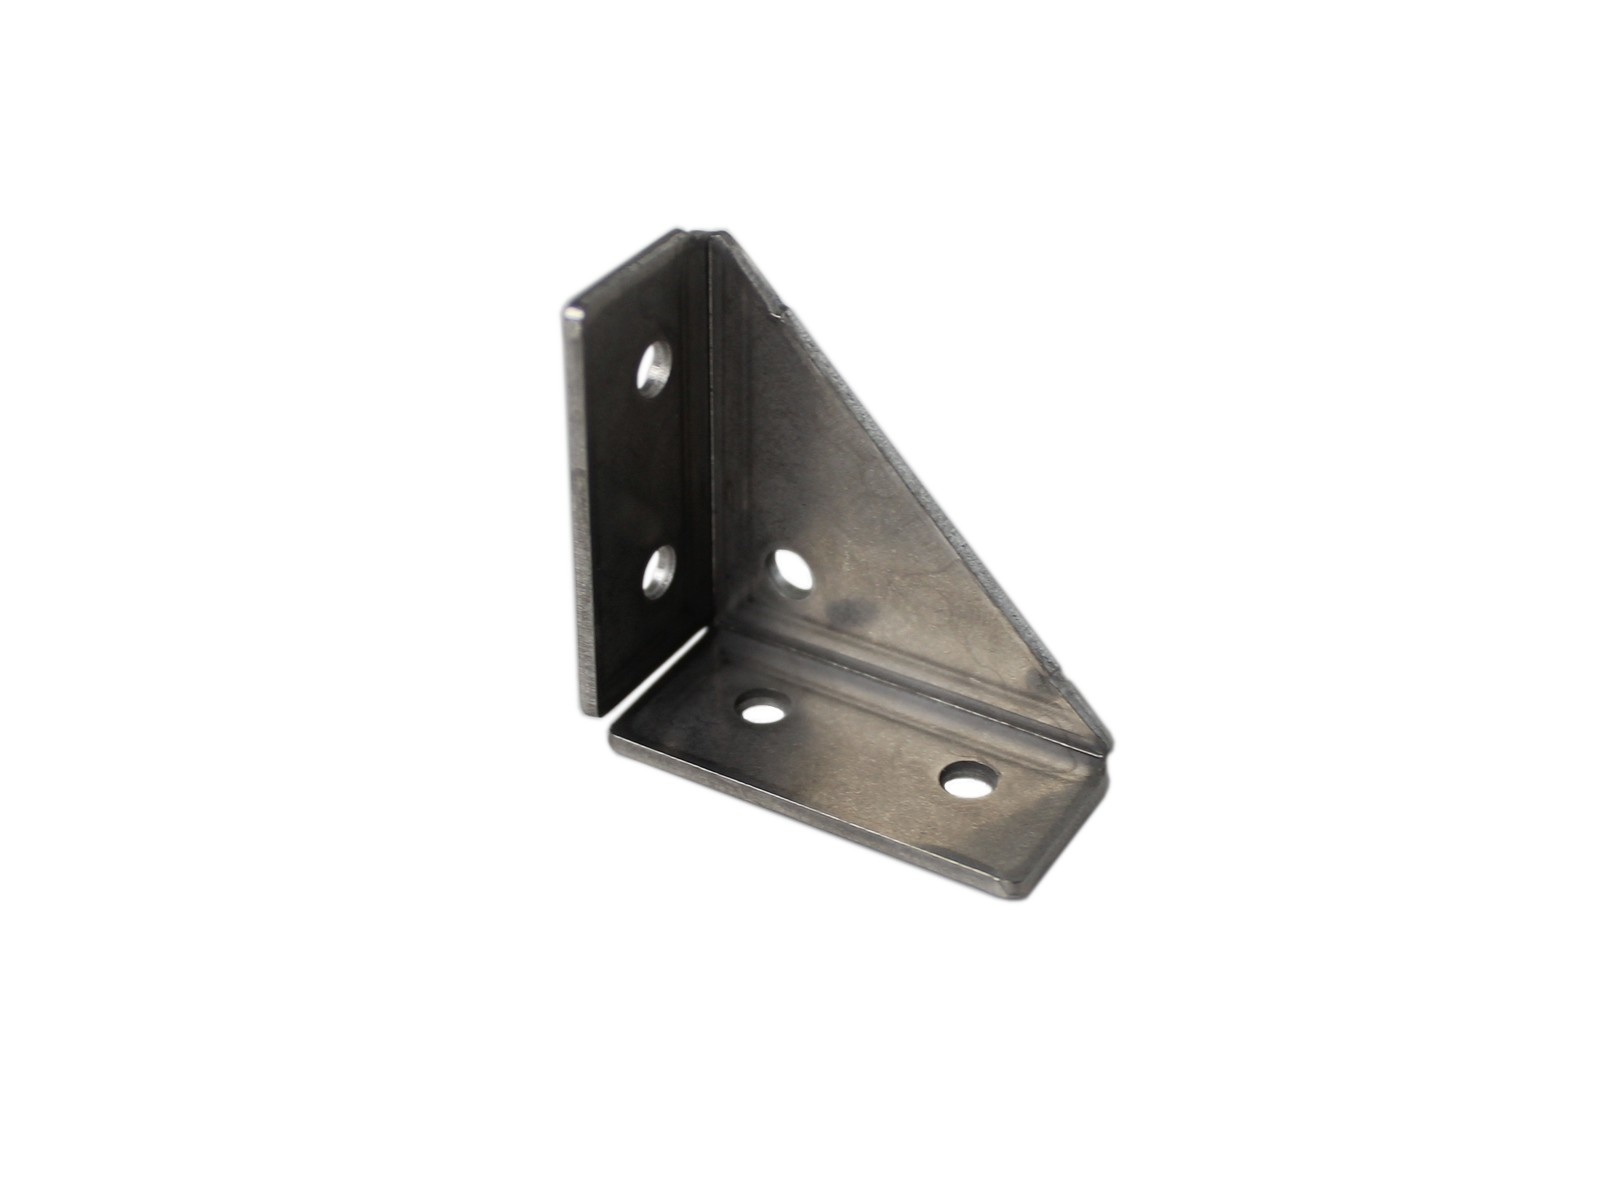 MakerBeamXL - 15mmx15mm 12 pieces triangular inner corner bracket for MakerBeamXL